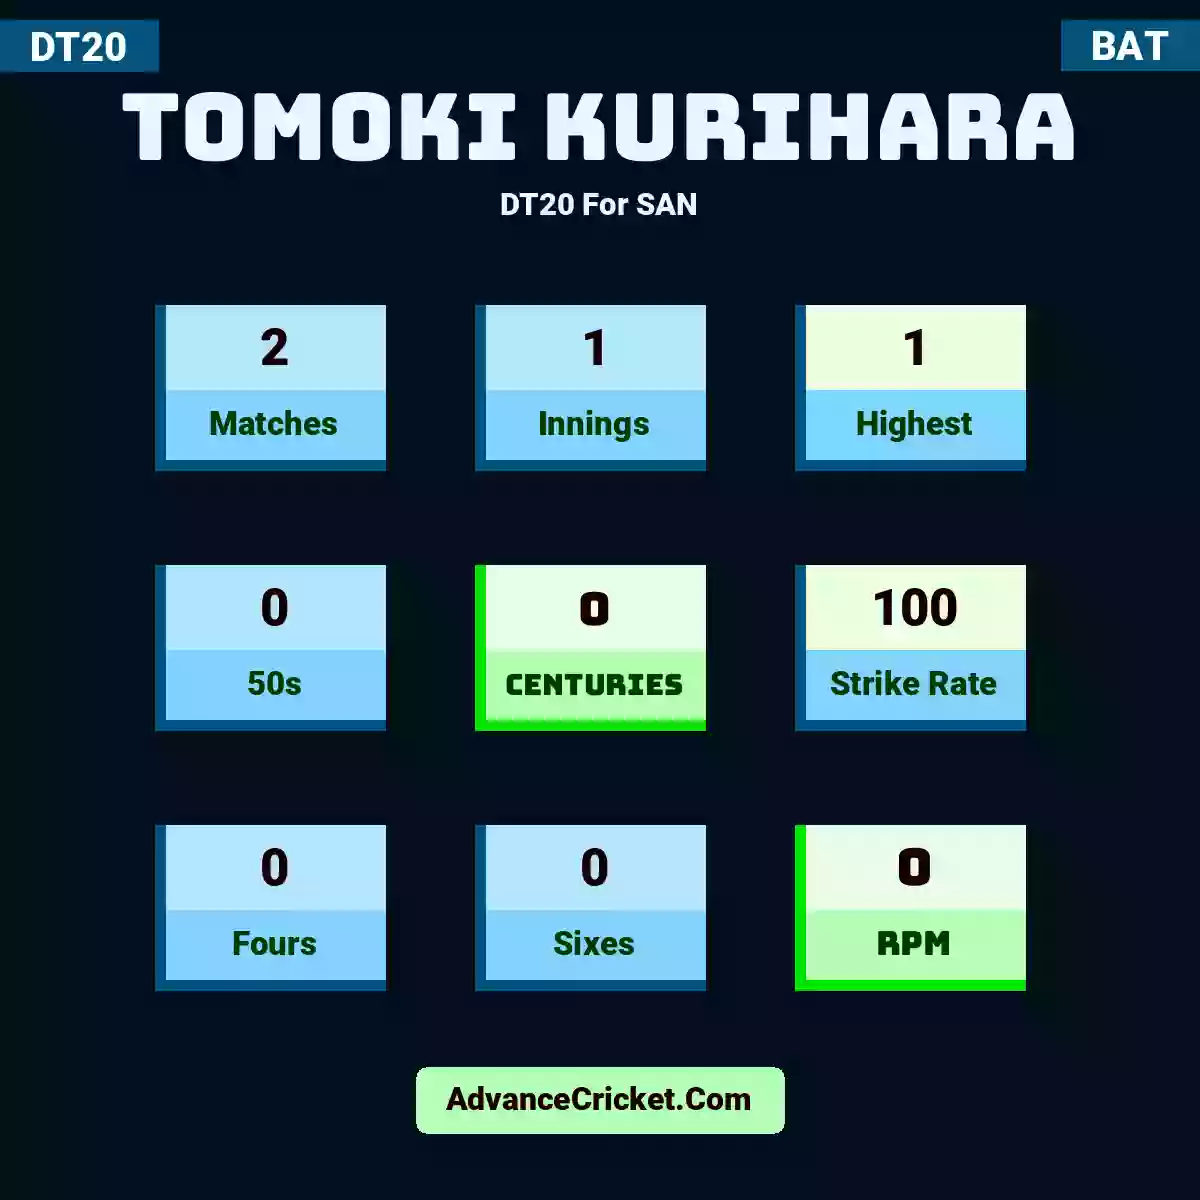 Tomoki Kurihara DT20  For SAN, Tomoki Kurihara played 2 matches, scored 1 runs as highest, 0 half-centuries, and 0 centuries, with a strike rate of 100. T.Kurihara hit 0 fours and 0 sixes, with an RPM of 0.